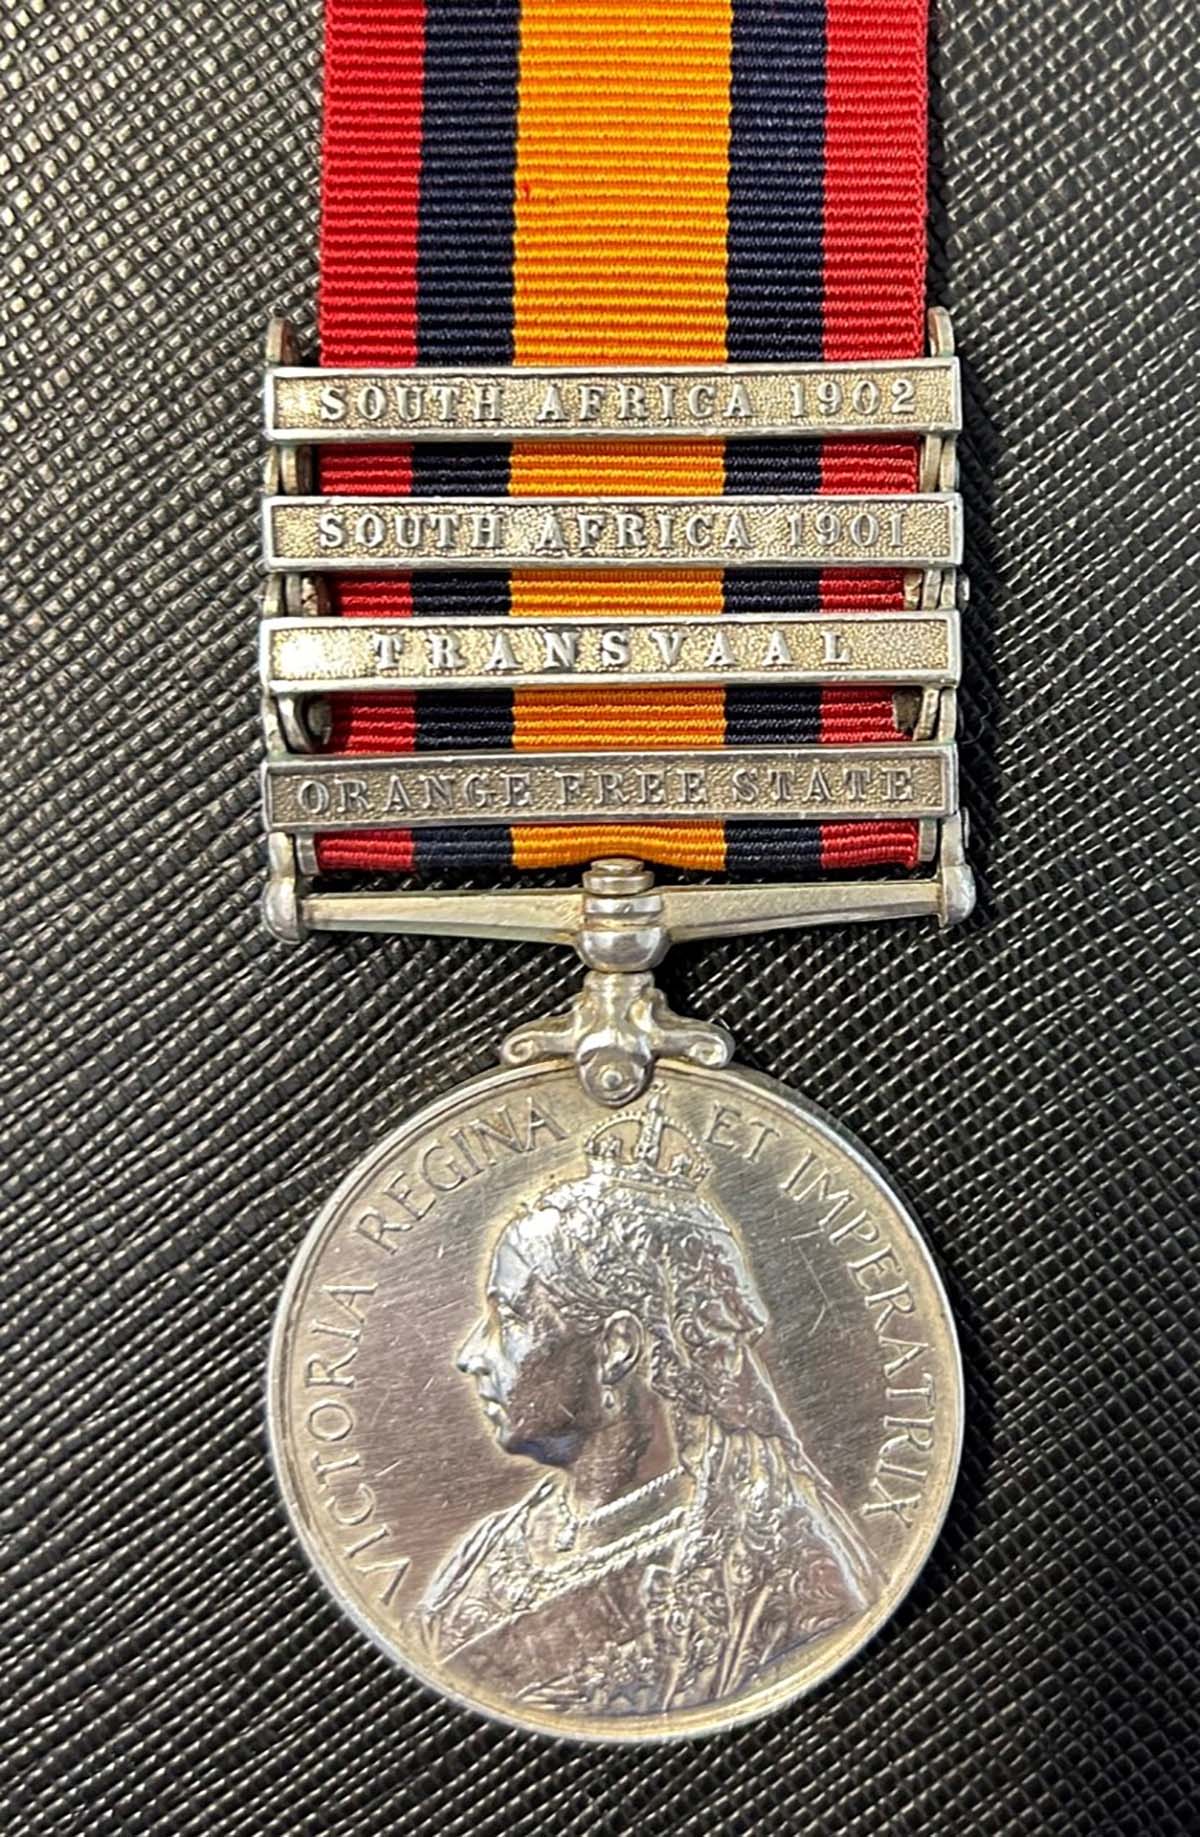 Worcestershire Medal Service: Pte A McCaskill, Royal Highlanders